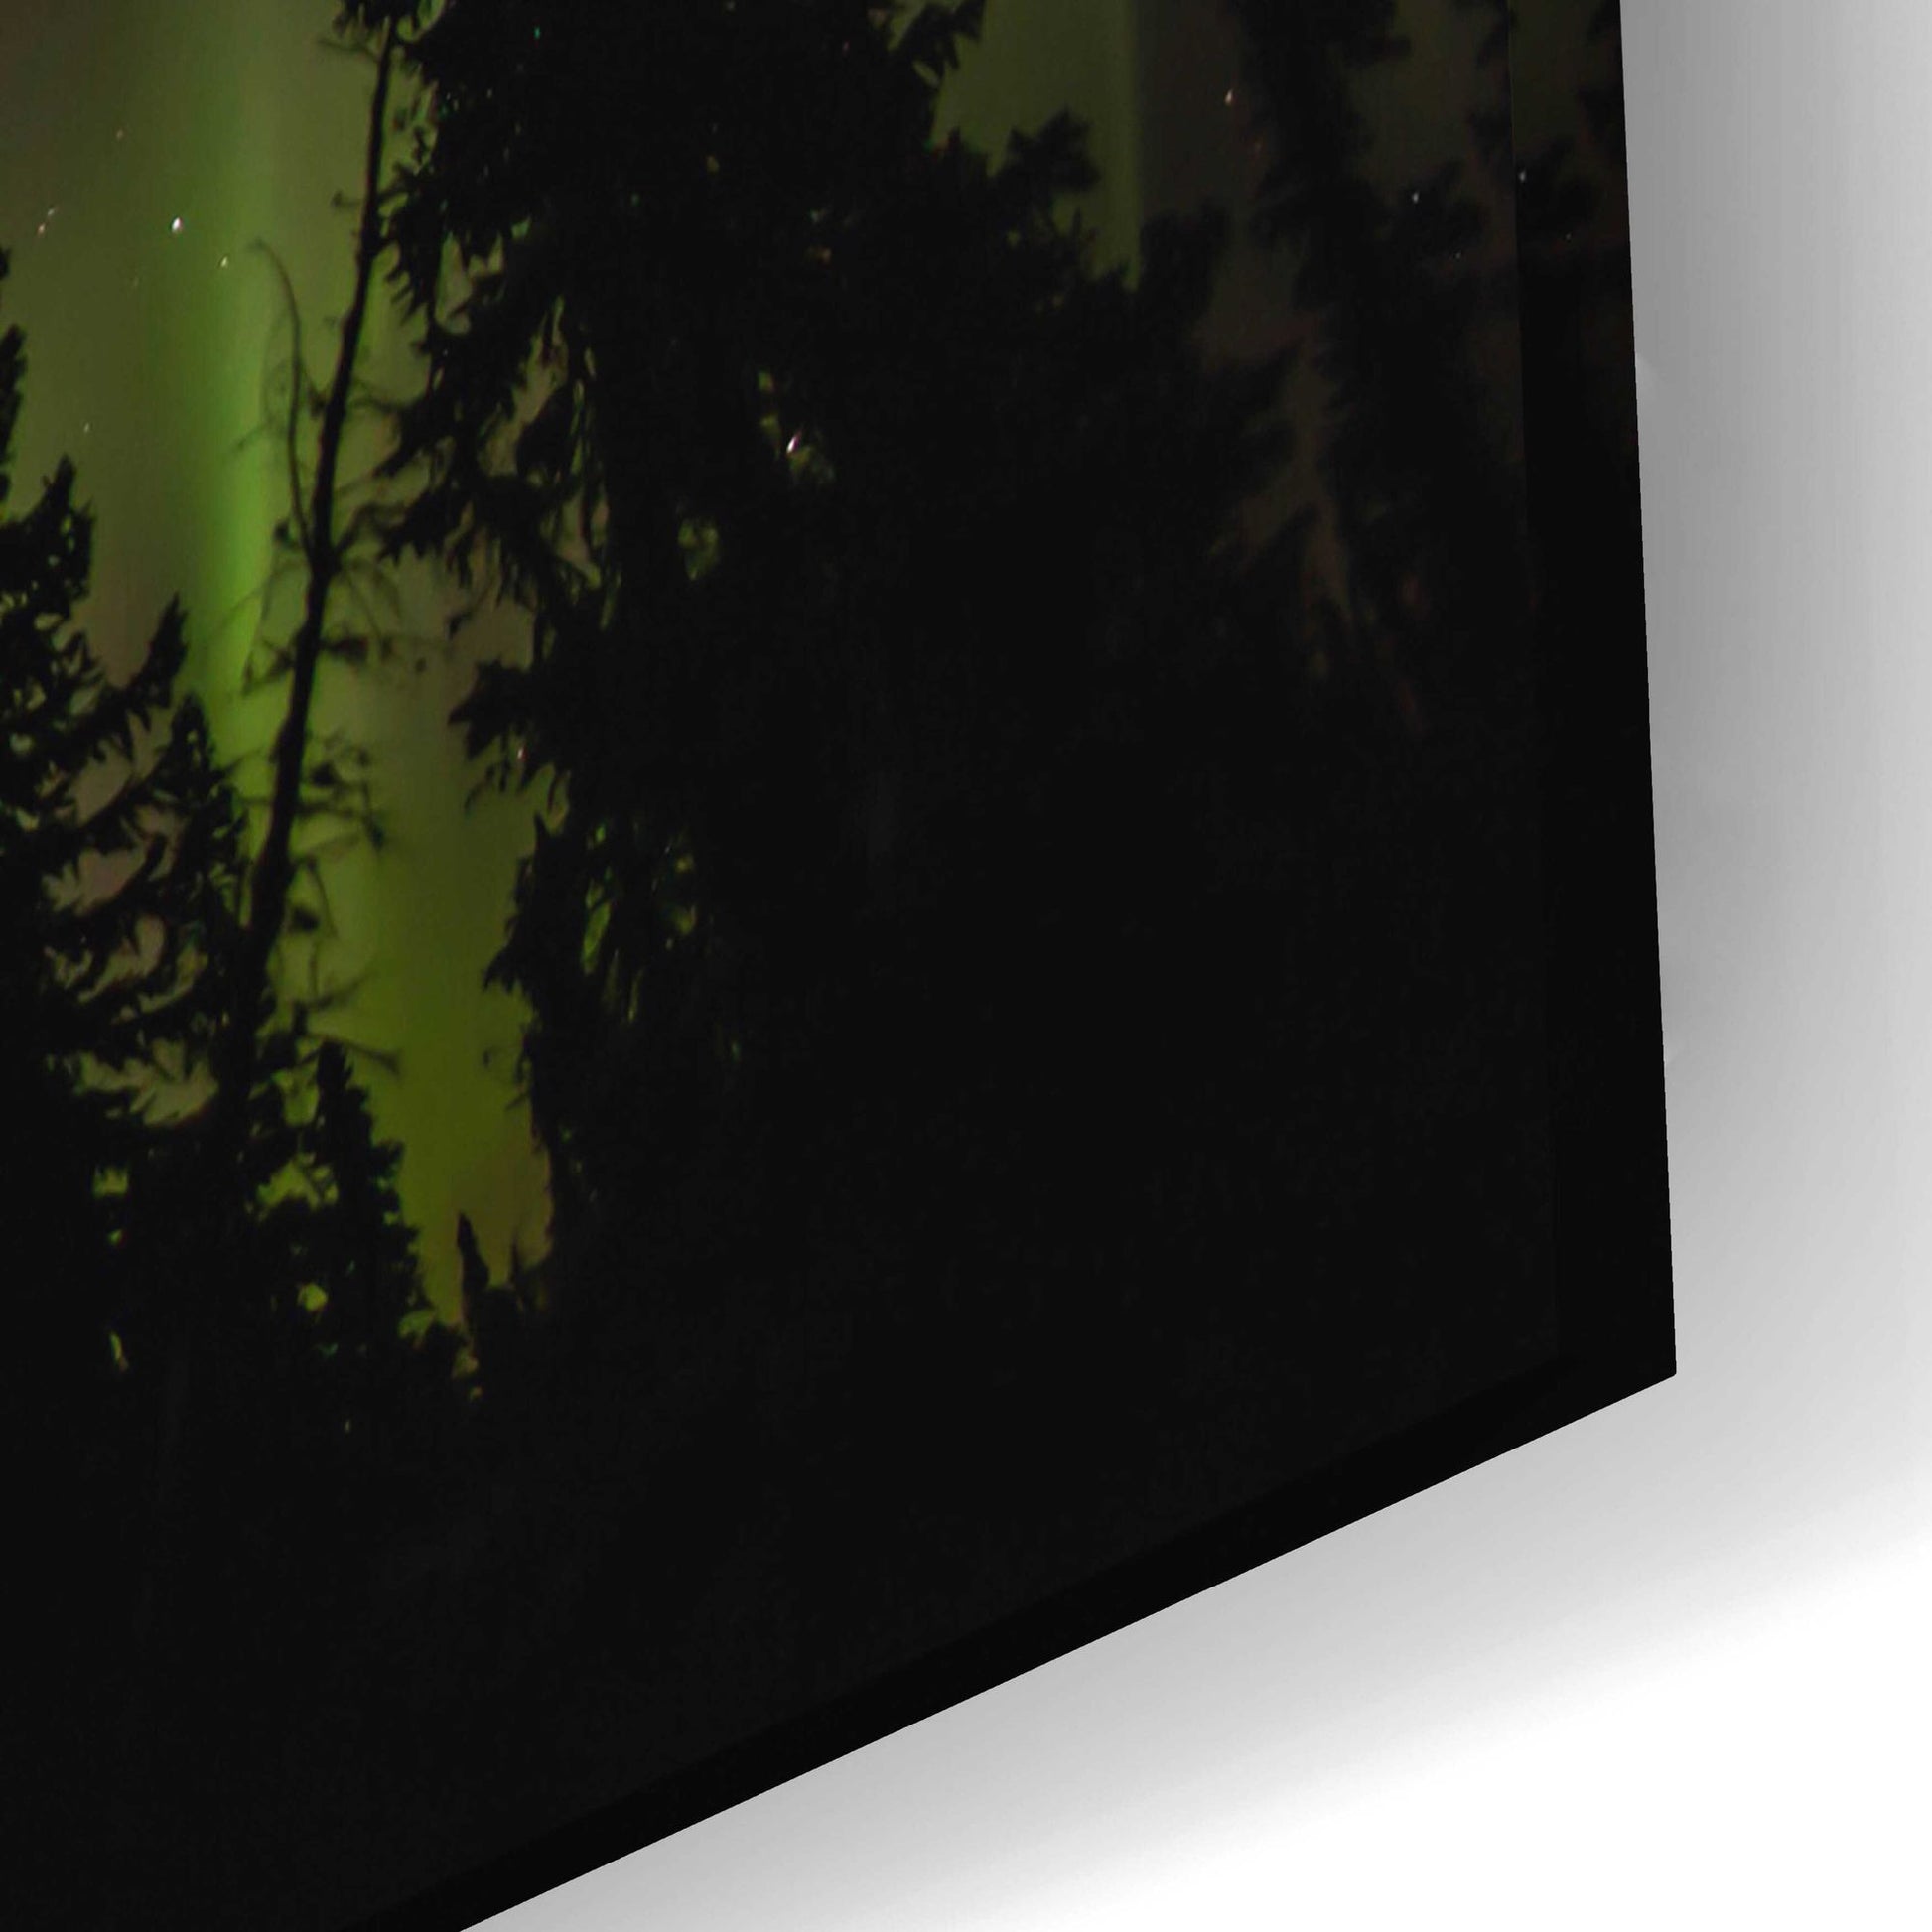 Epic Art 'Northern Lights 2' by Epic Portfolio, Acrylic Glass Wall Art,24x16